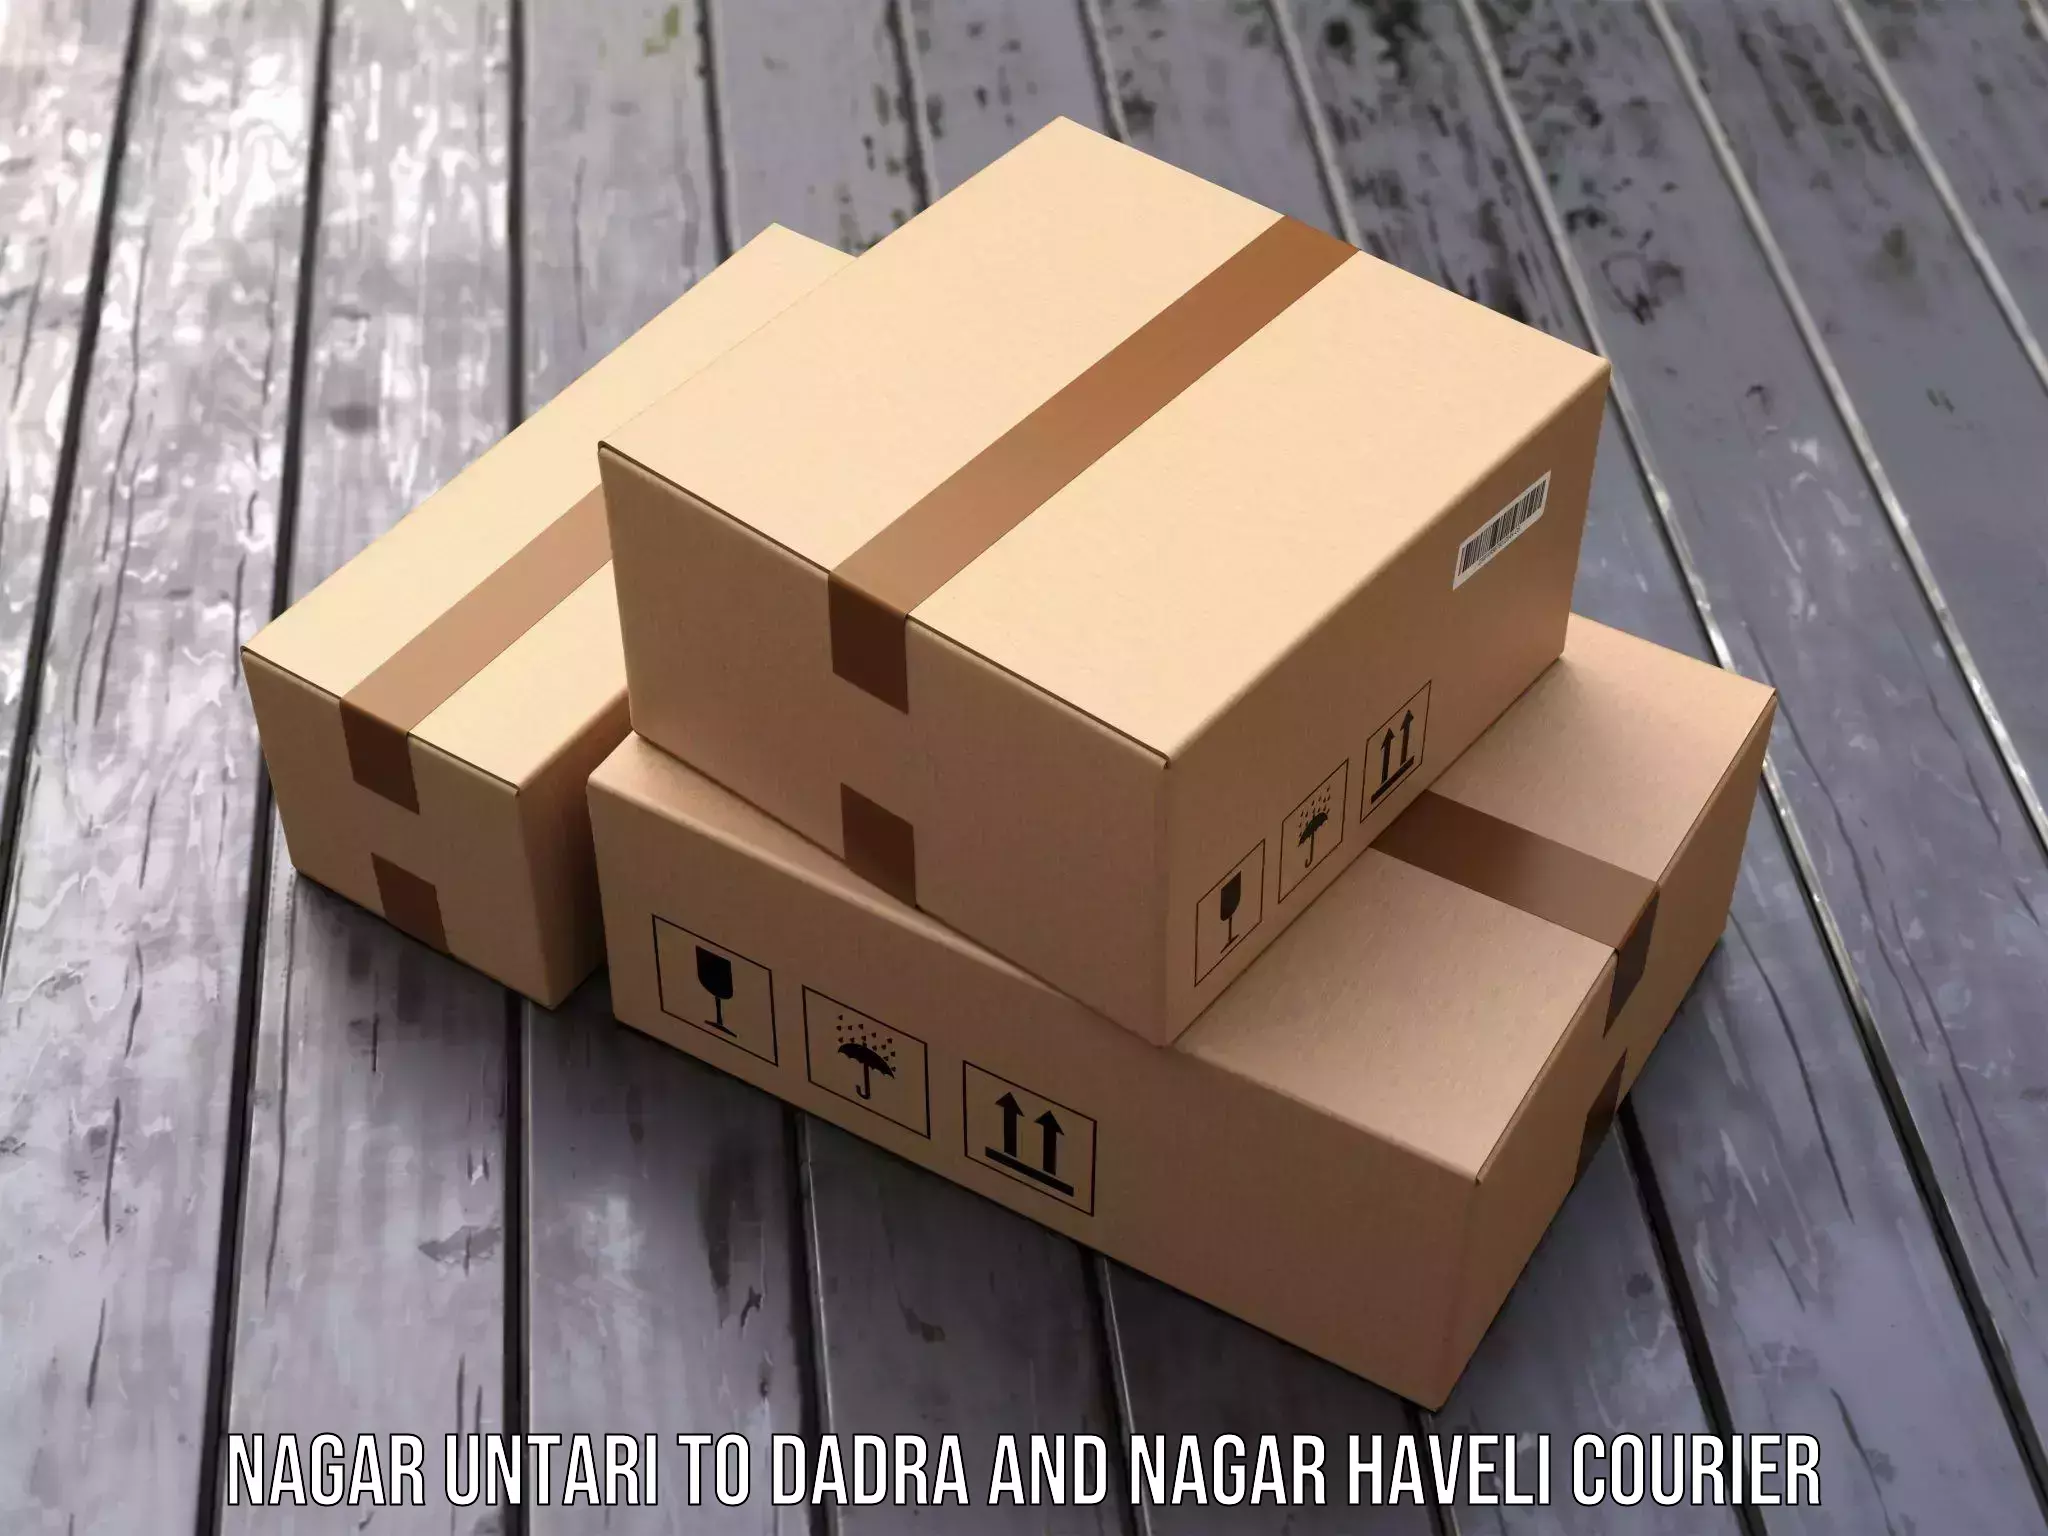 Cash on delivery service Nagar Untari to Dadra and Nagar Haveli